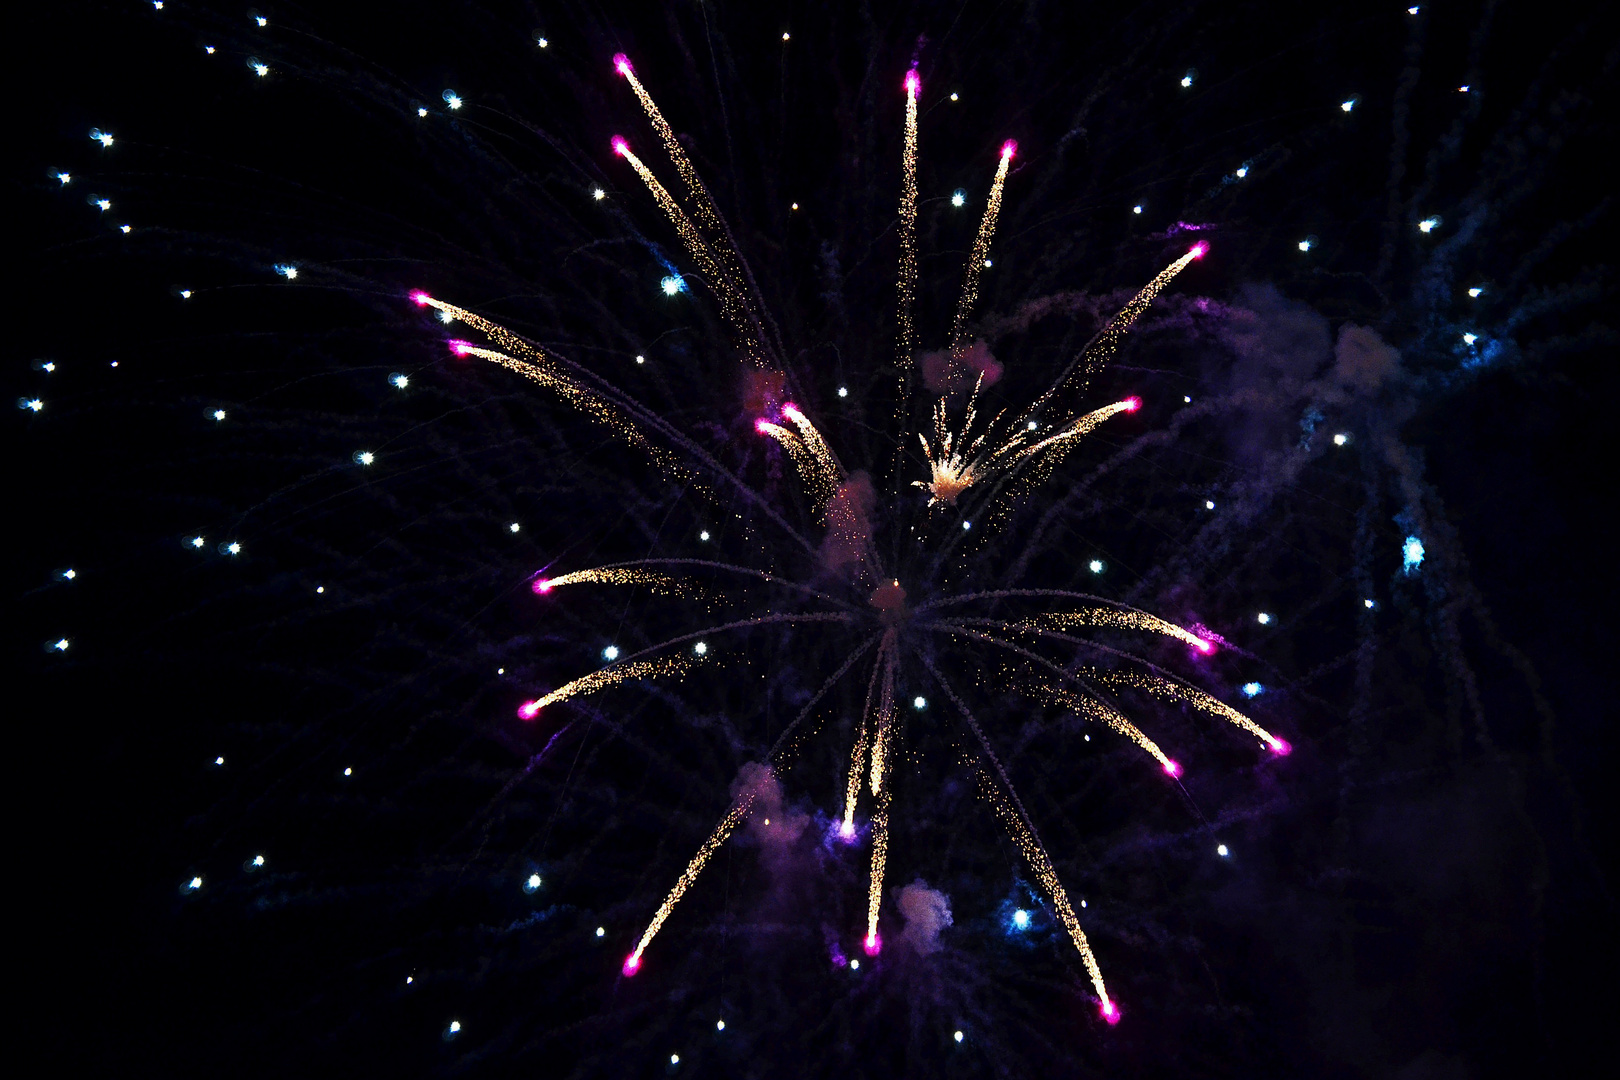 Fireworks_Skylinepark_2019